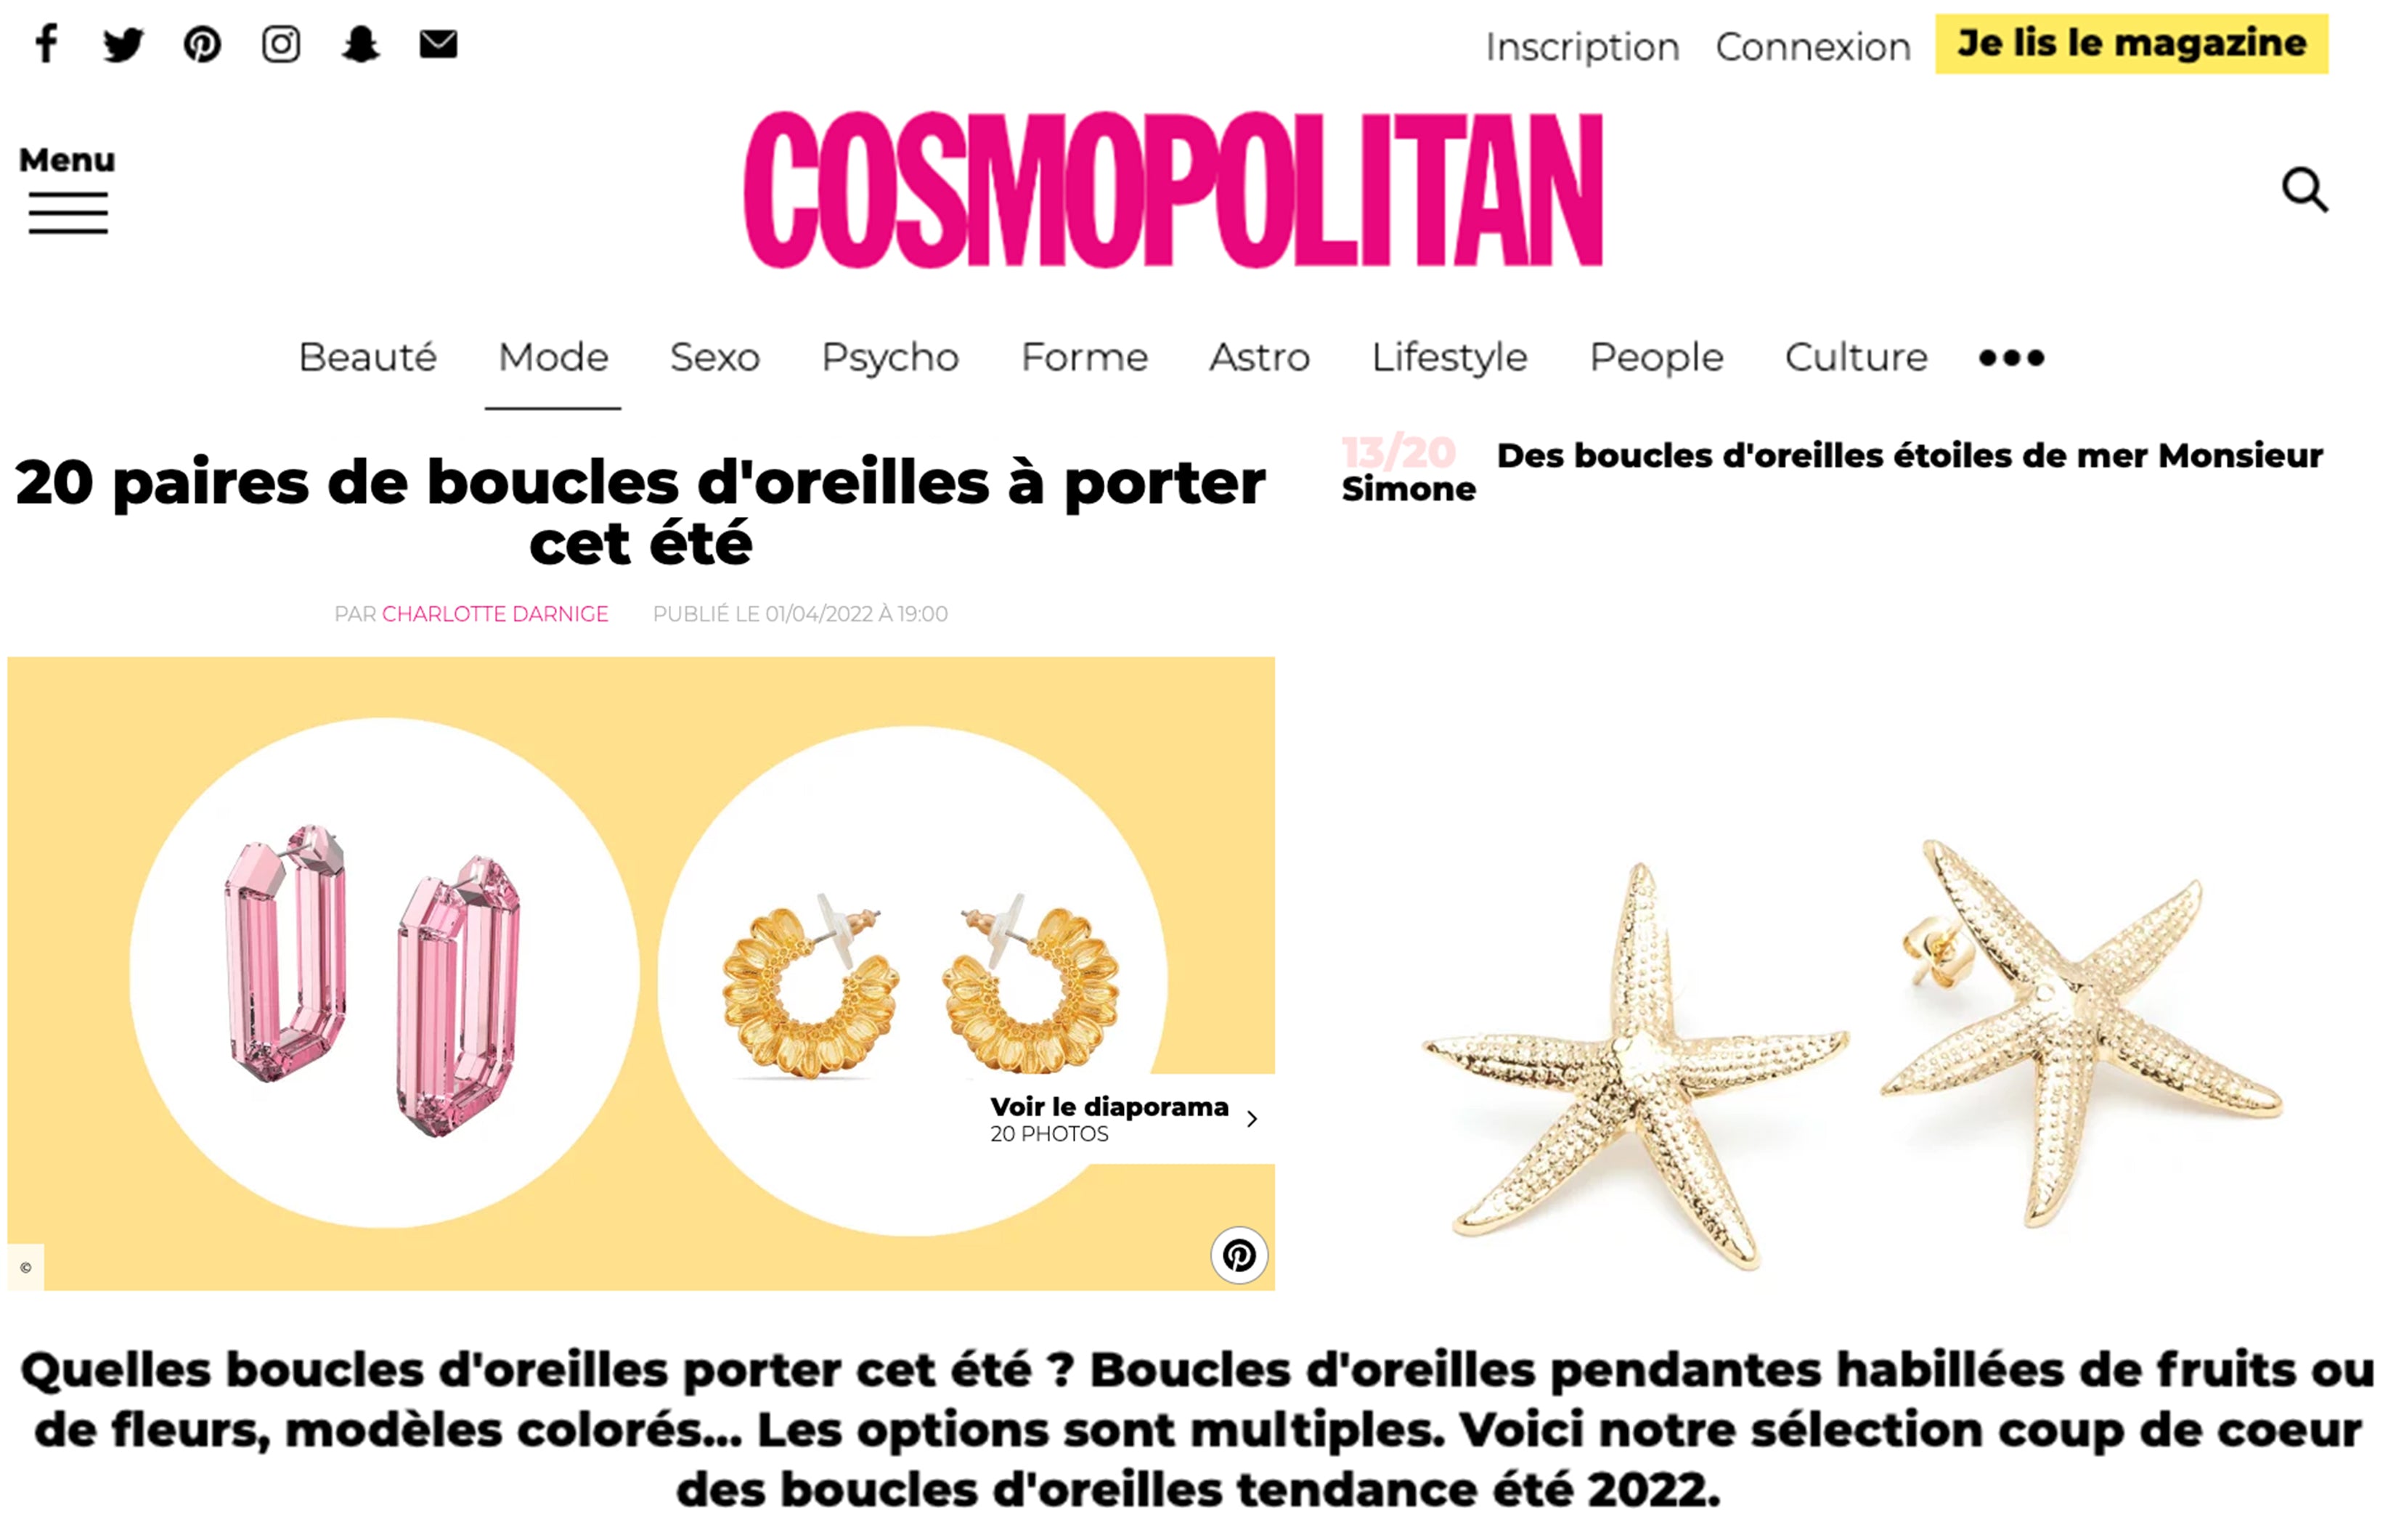 Bijoux Monsieur Simone - Cosmopolitan.fr - Avril 2022